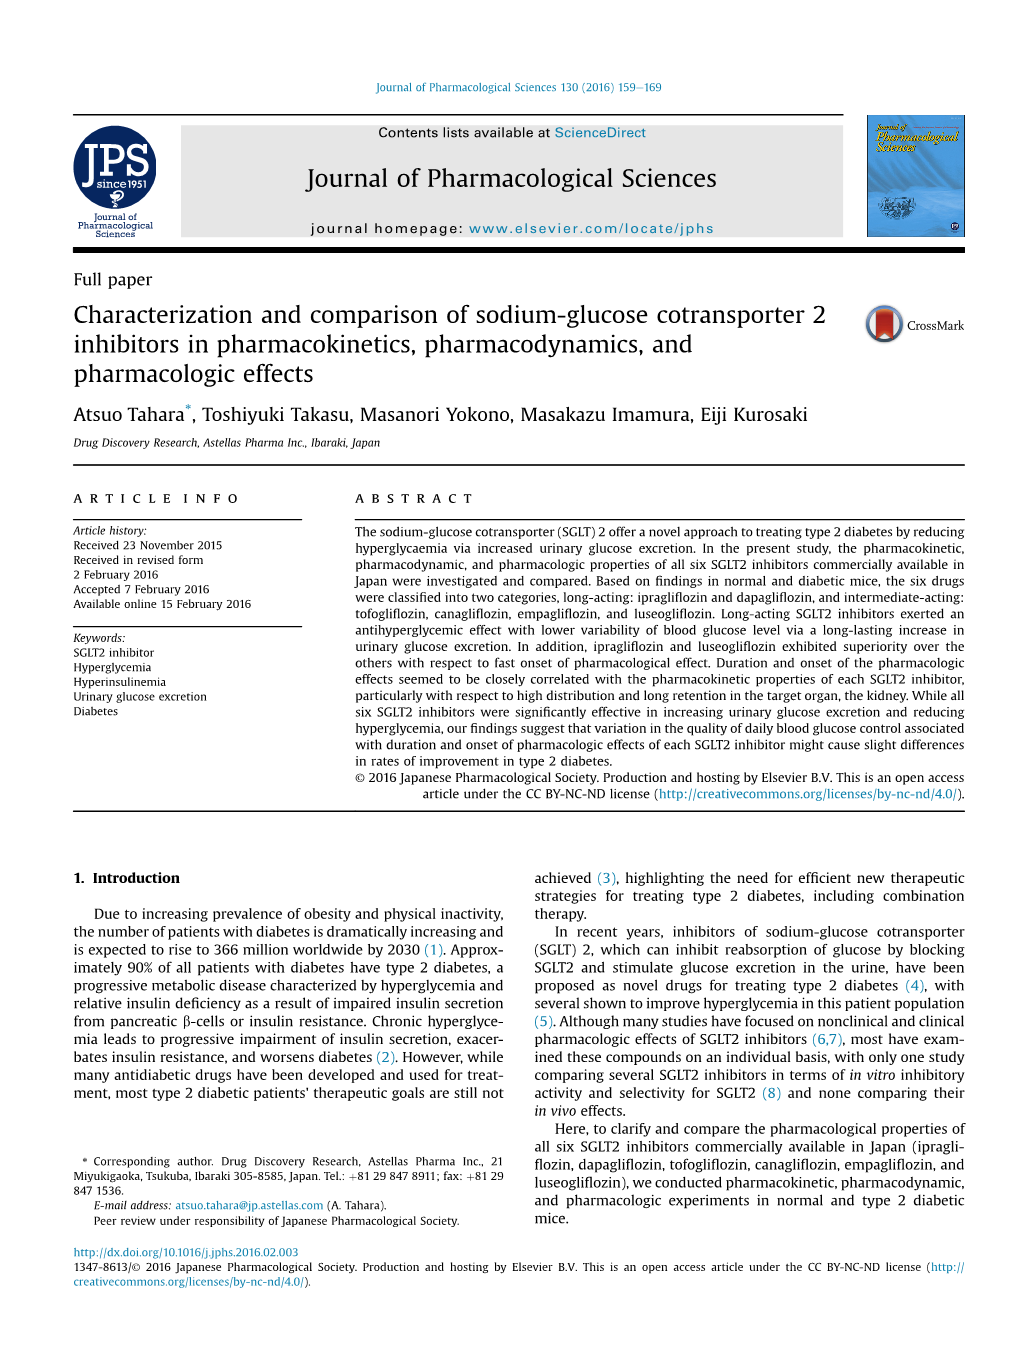 Characterization and Comparison of Sodium-Glucose Cotransporter 2 Inhibitors in Pharmacokinetics, Pharmacodynamics, and Pharmacologic Effects